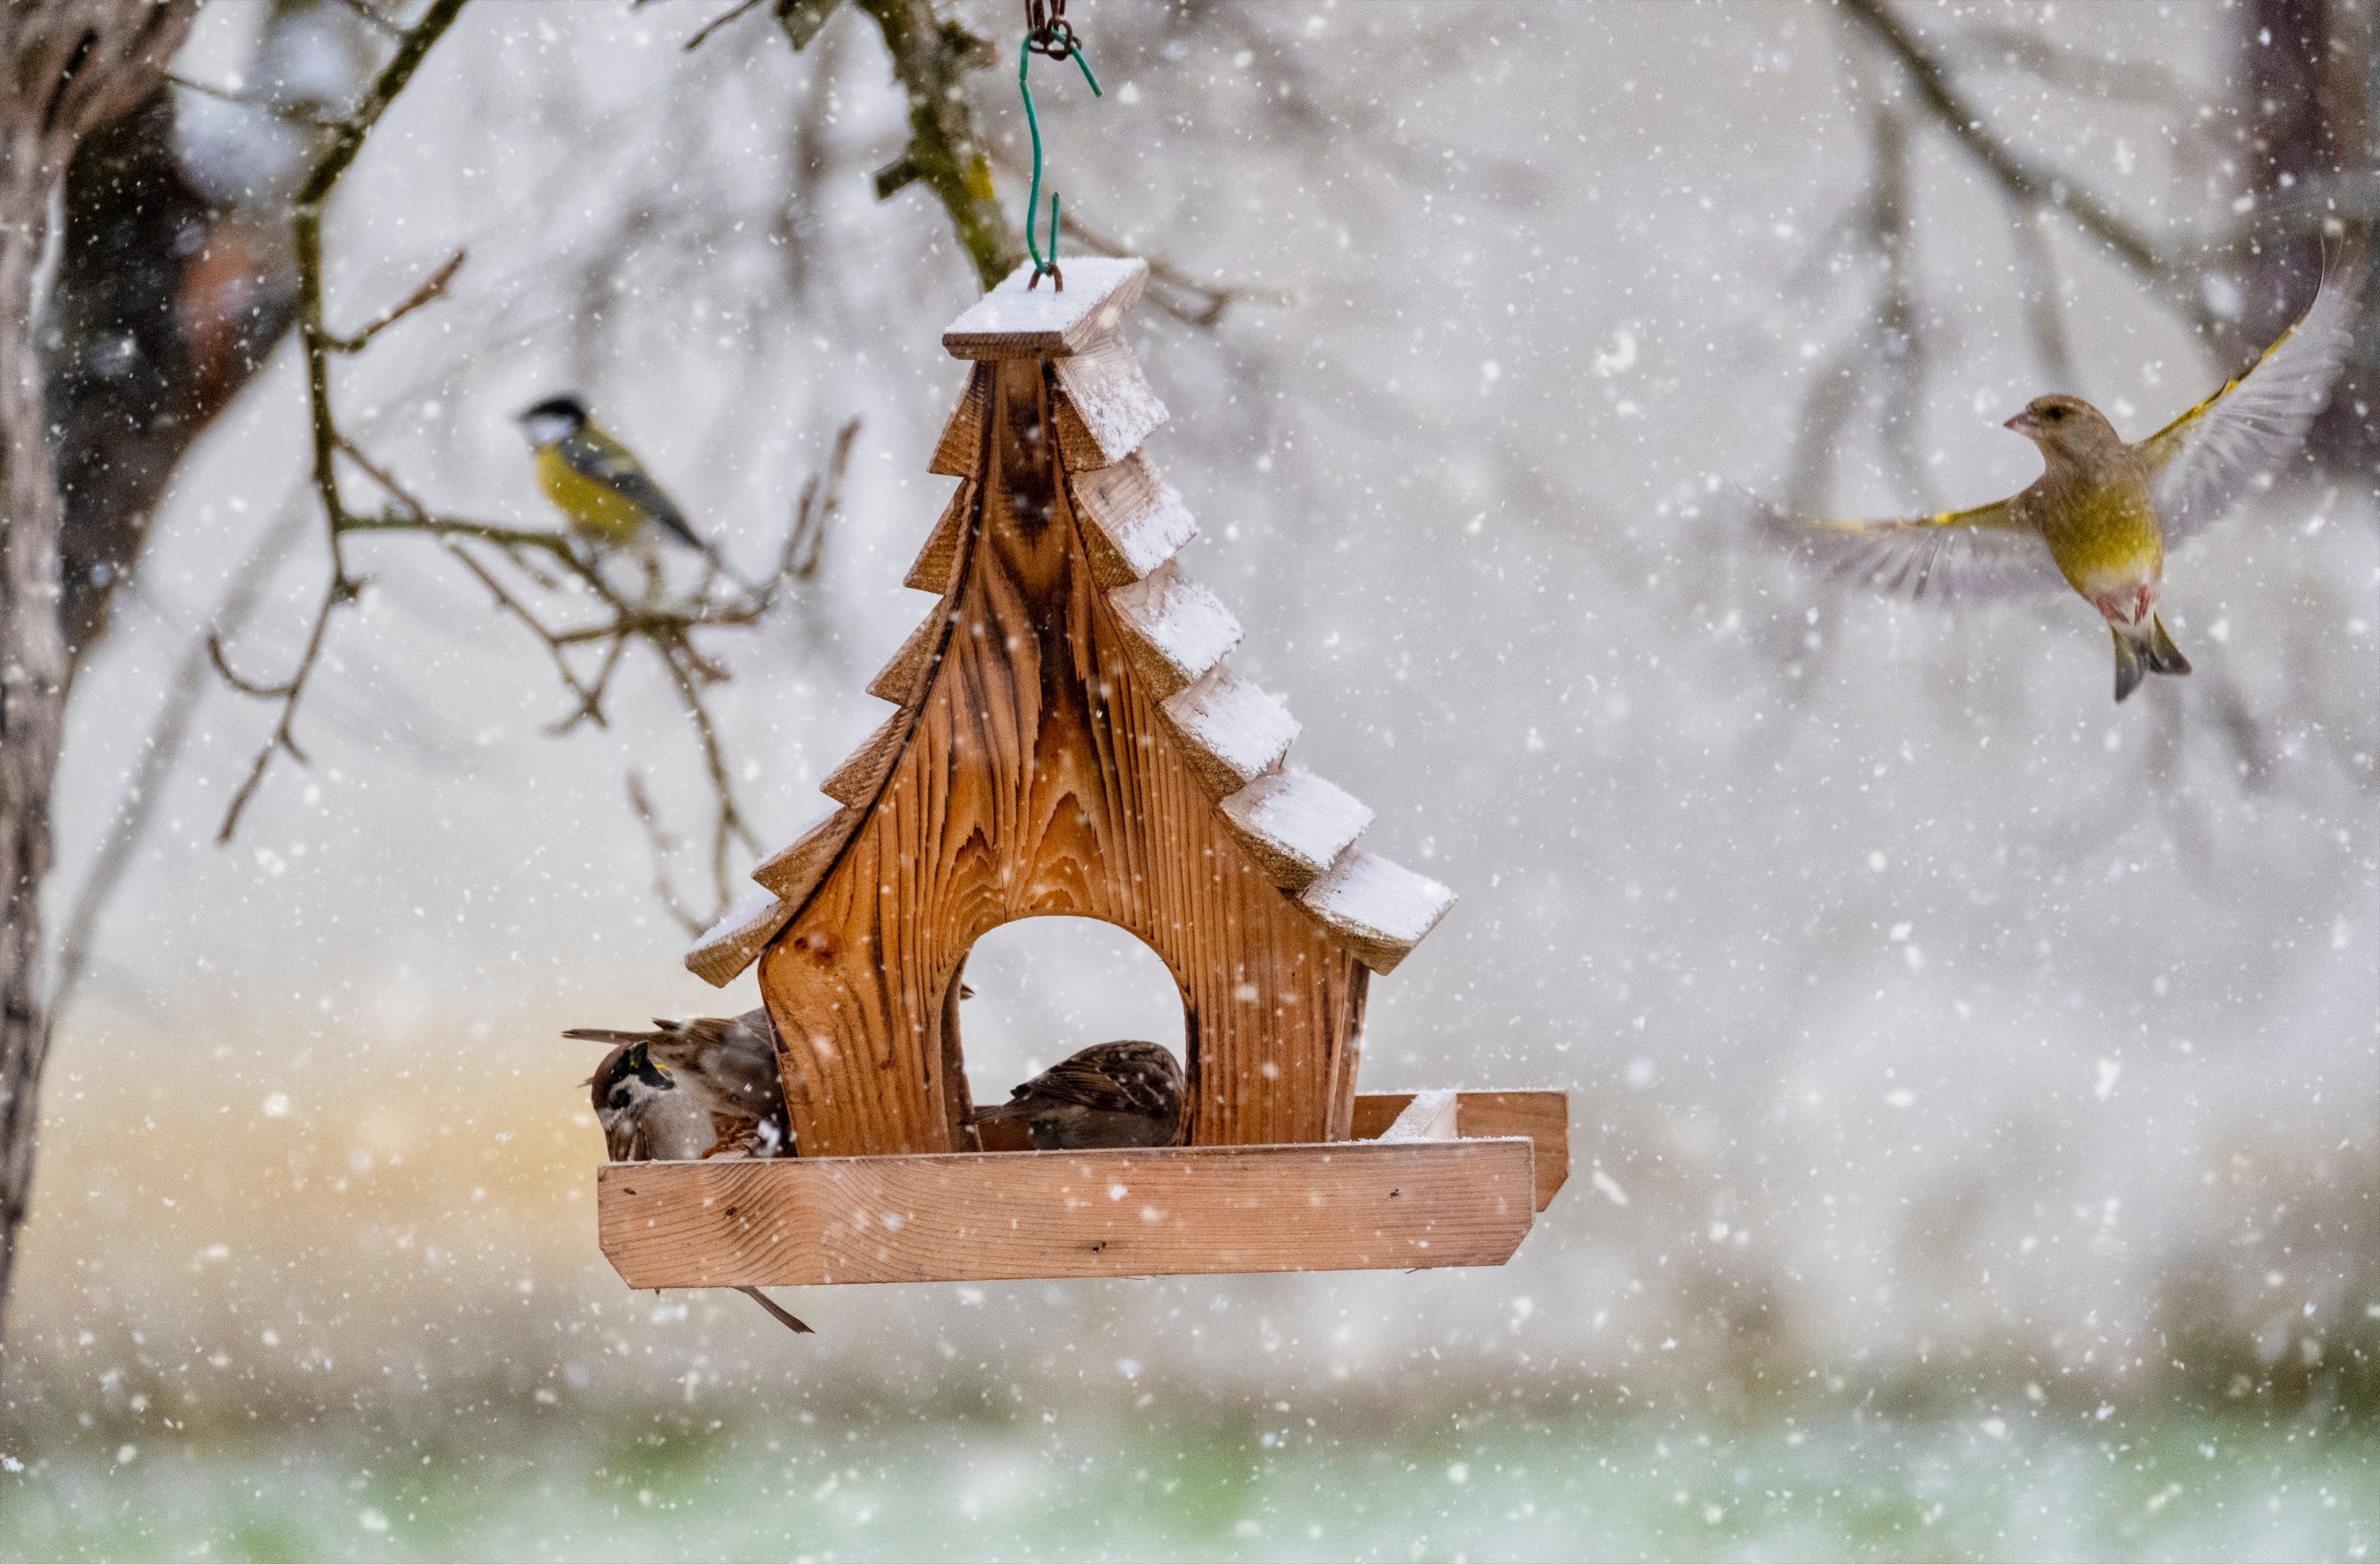 Birdhouse in the winter